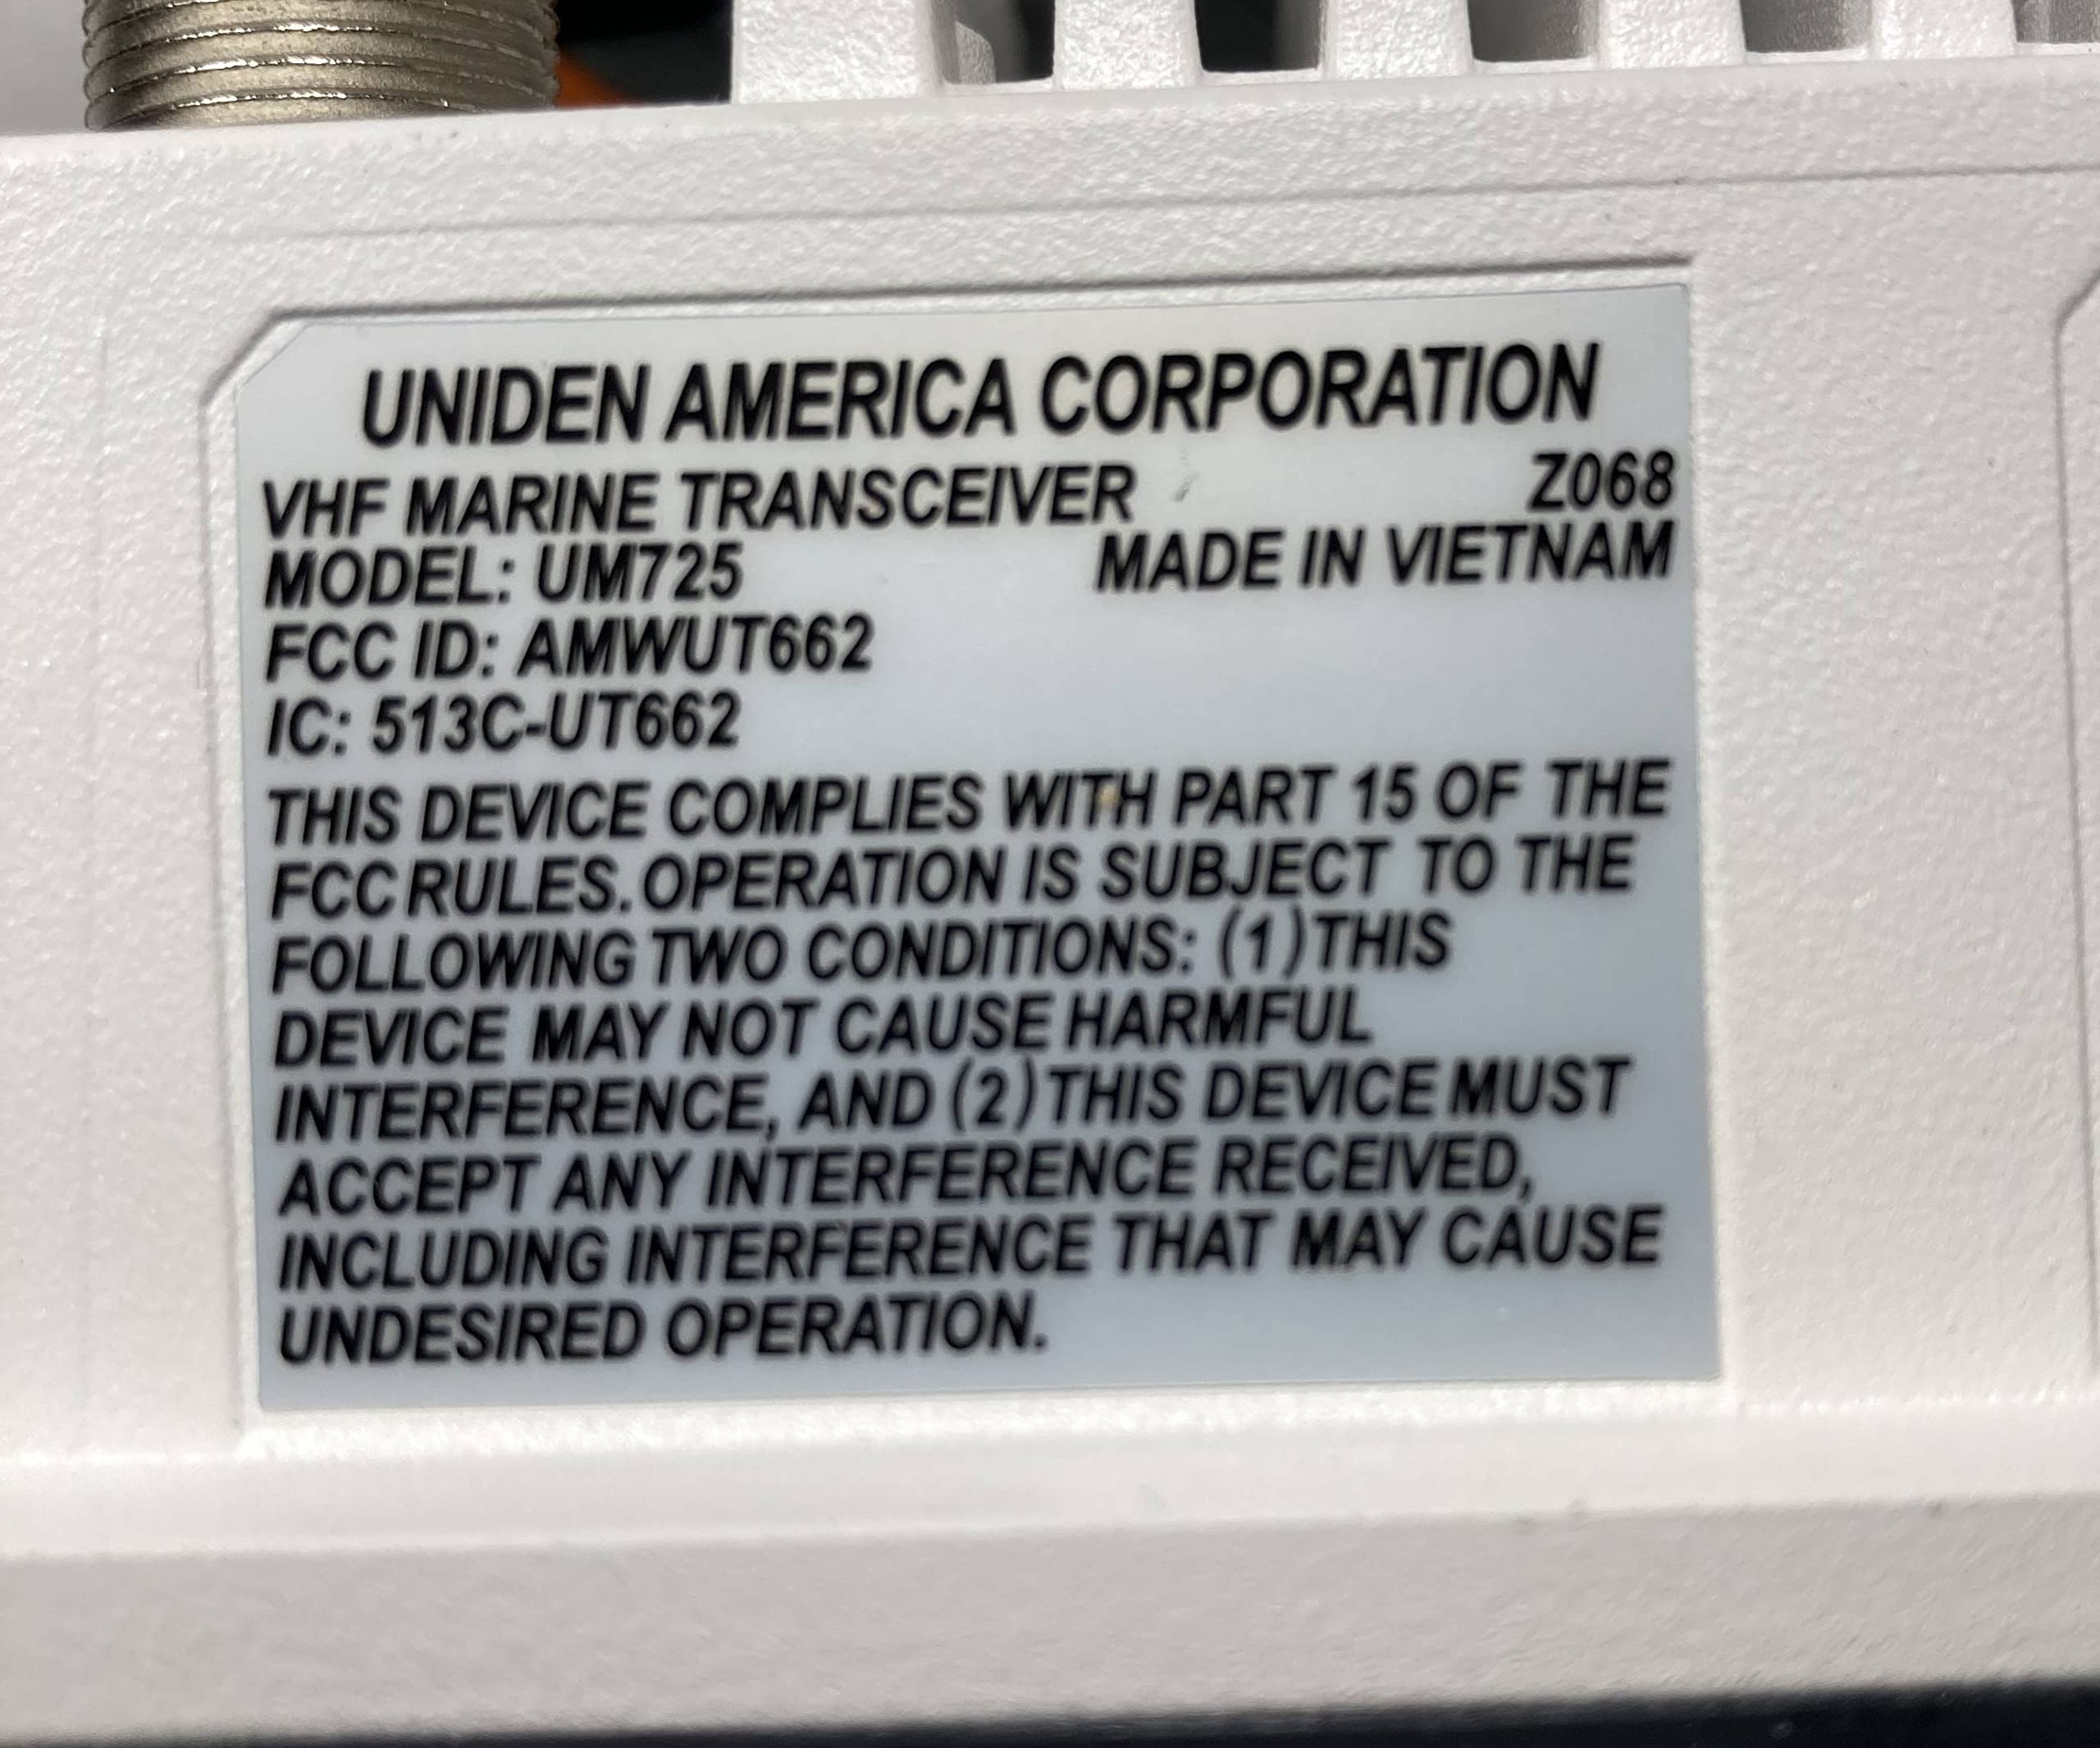 Uniden UM725 Marine VHF Radio, All USA, Canada, and Int'l. Marine Channels, 1Watt/25Watt Transmit Power, Largest LCD Screen in Class, NOAA Weather Channels w/Alerts, Speaker Mic, IPX8 Waterproof.